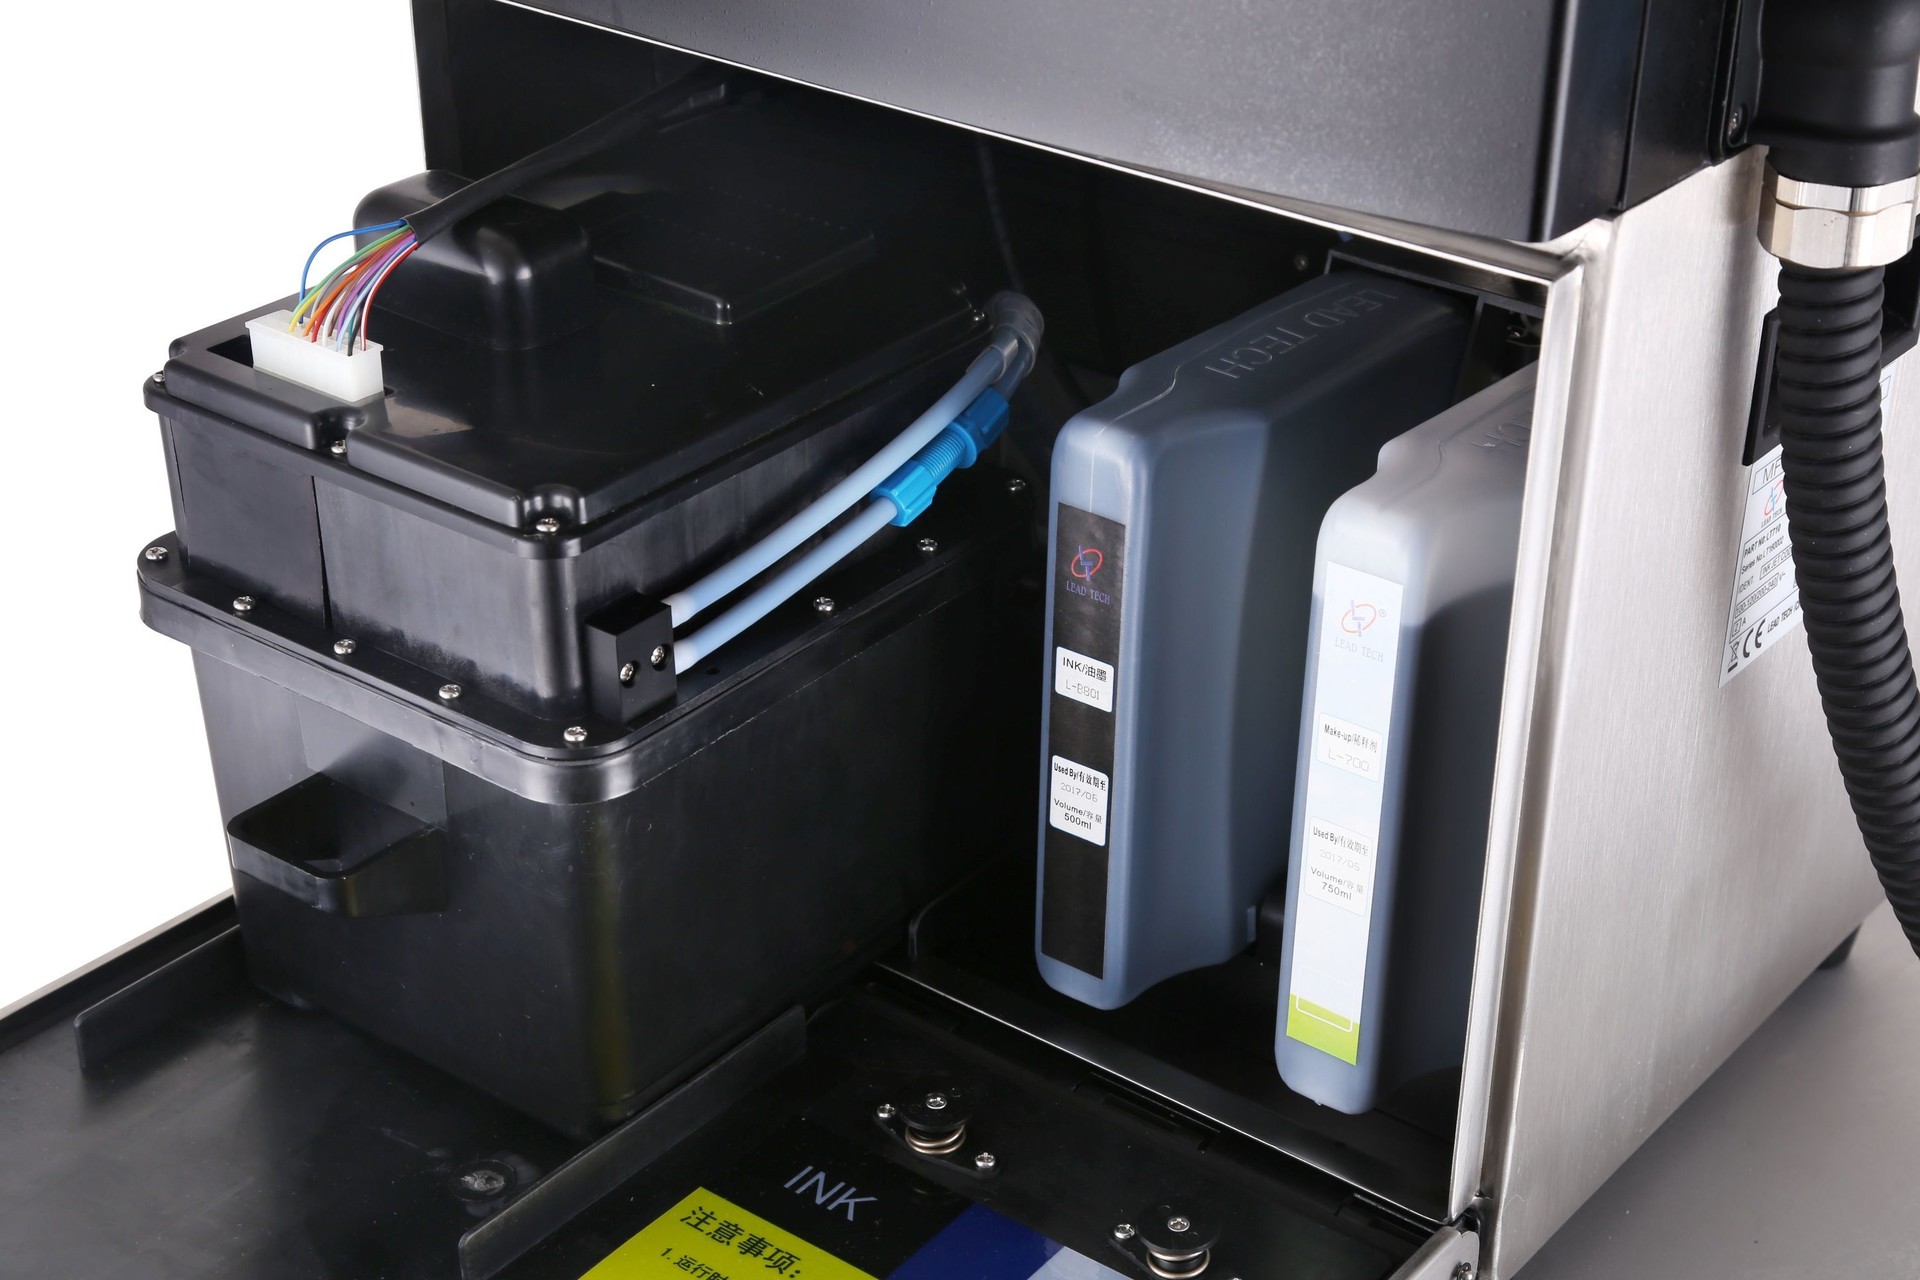 Lead Tech Lt760 Cij Inkjet Printer for PE Pipe Coding